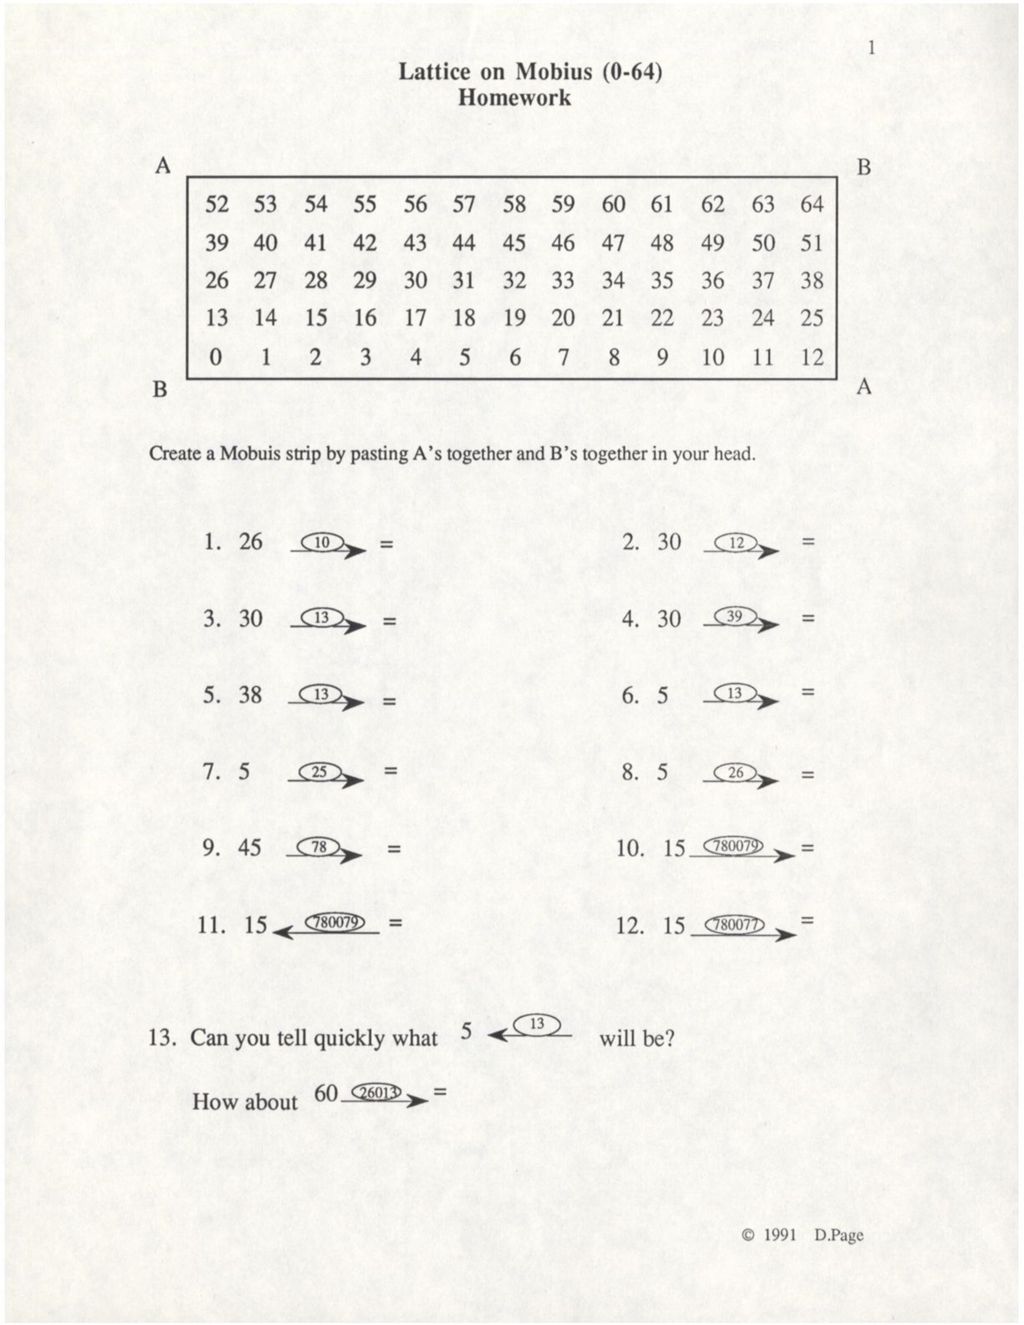 Lattice on Mobius (0-64) Homework w/ Answer Key (1991)